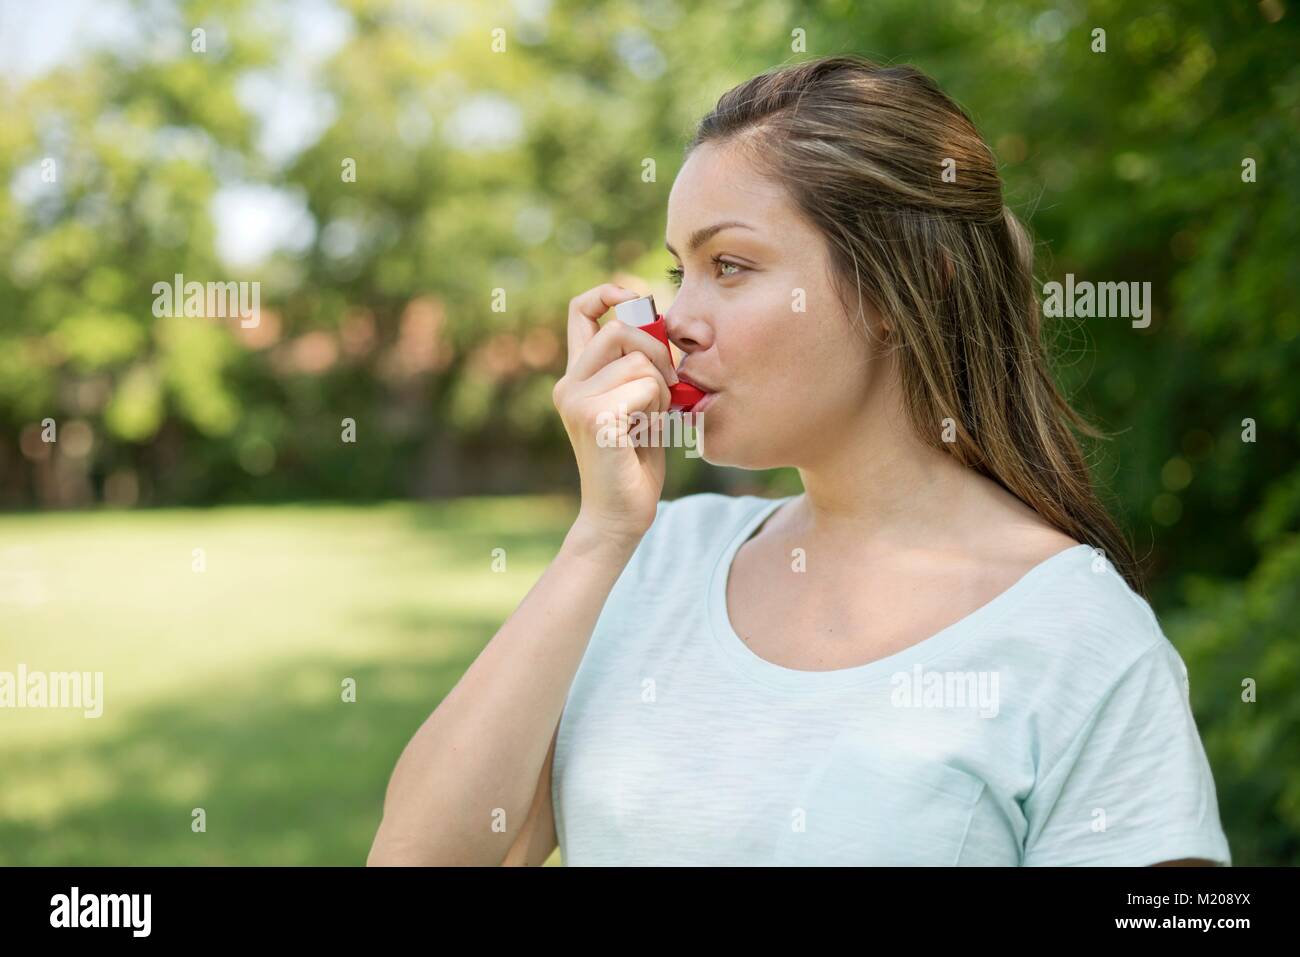 Young woman using an inhaler. Stock Photo